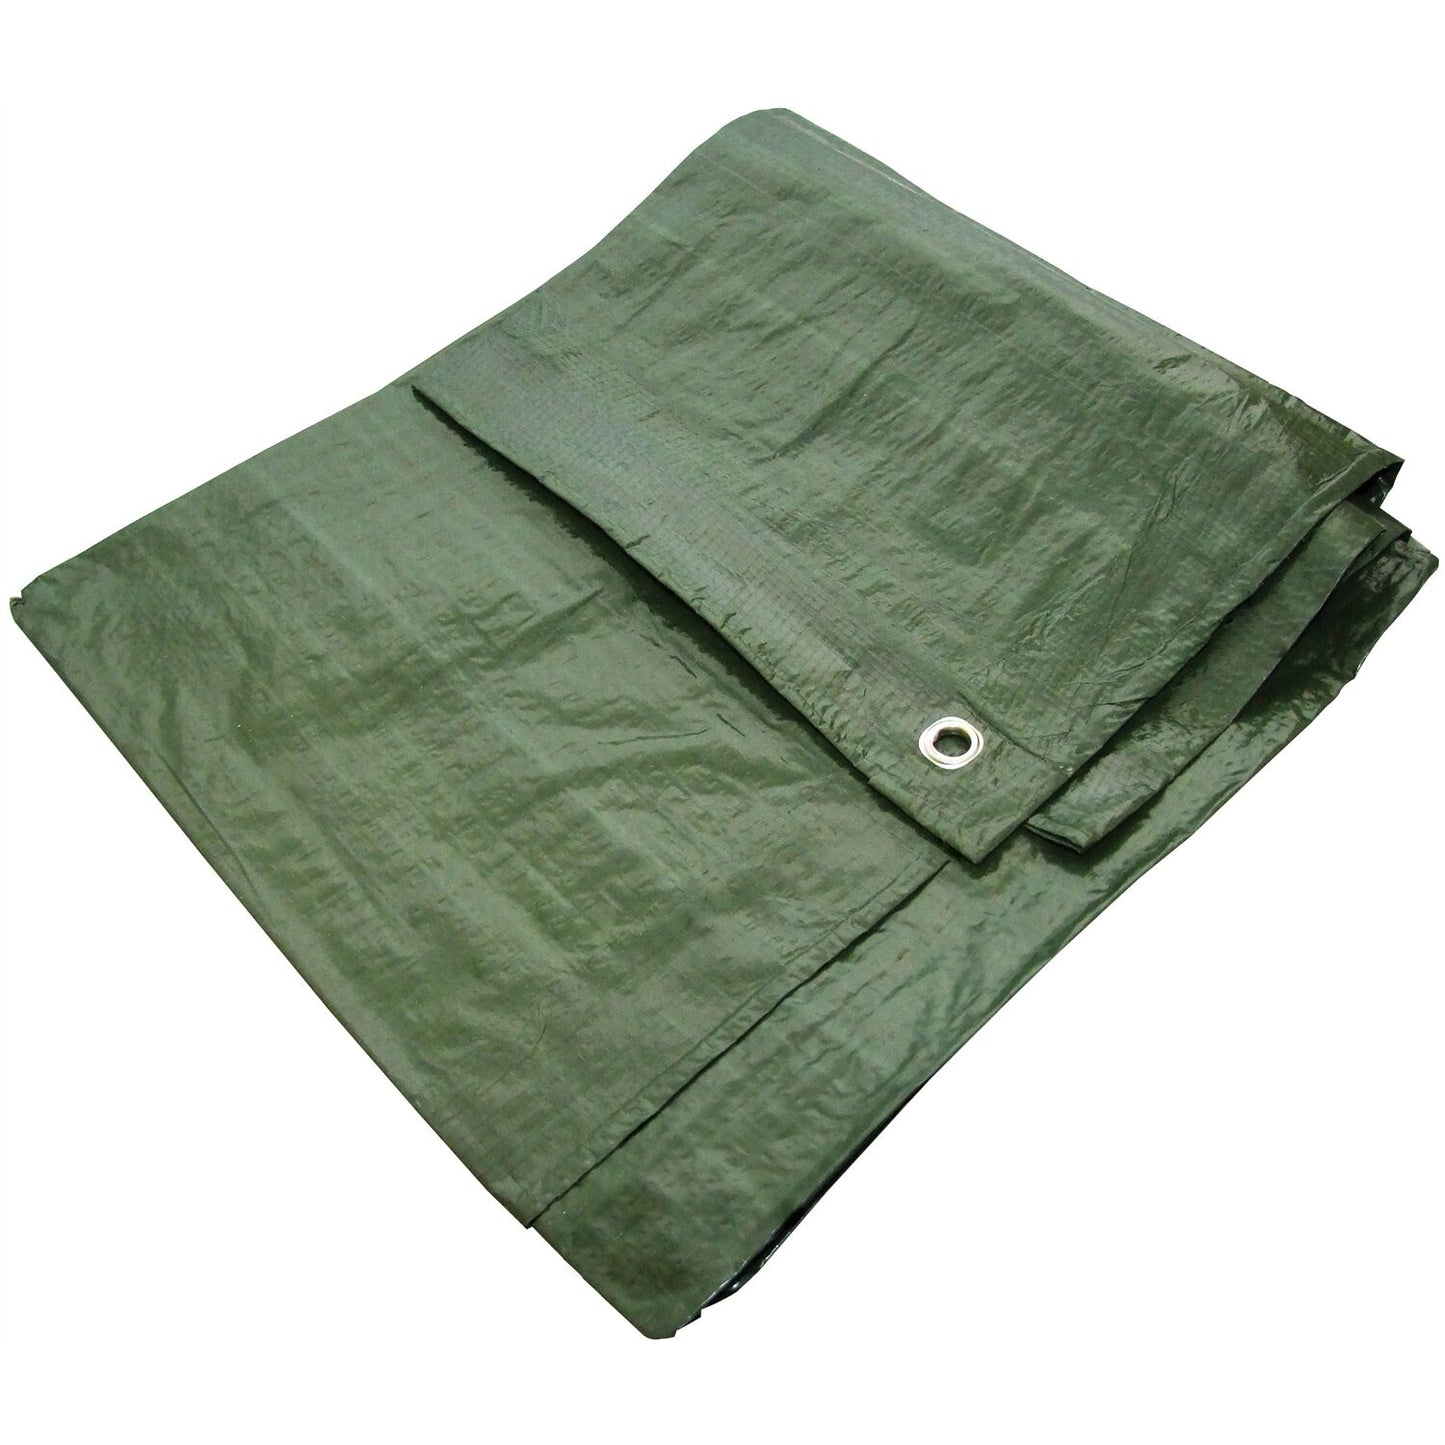 Yuzet Green 1.2m x 1.8m Standard Waterproof Tarpaulin Ground Camping Sheet